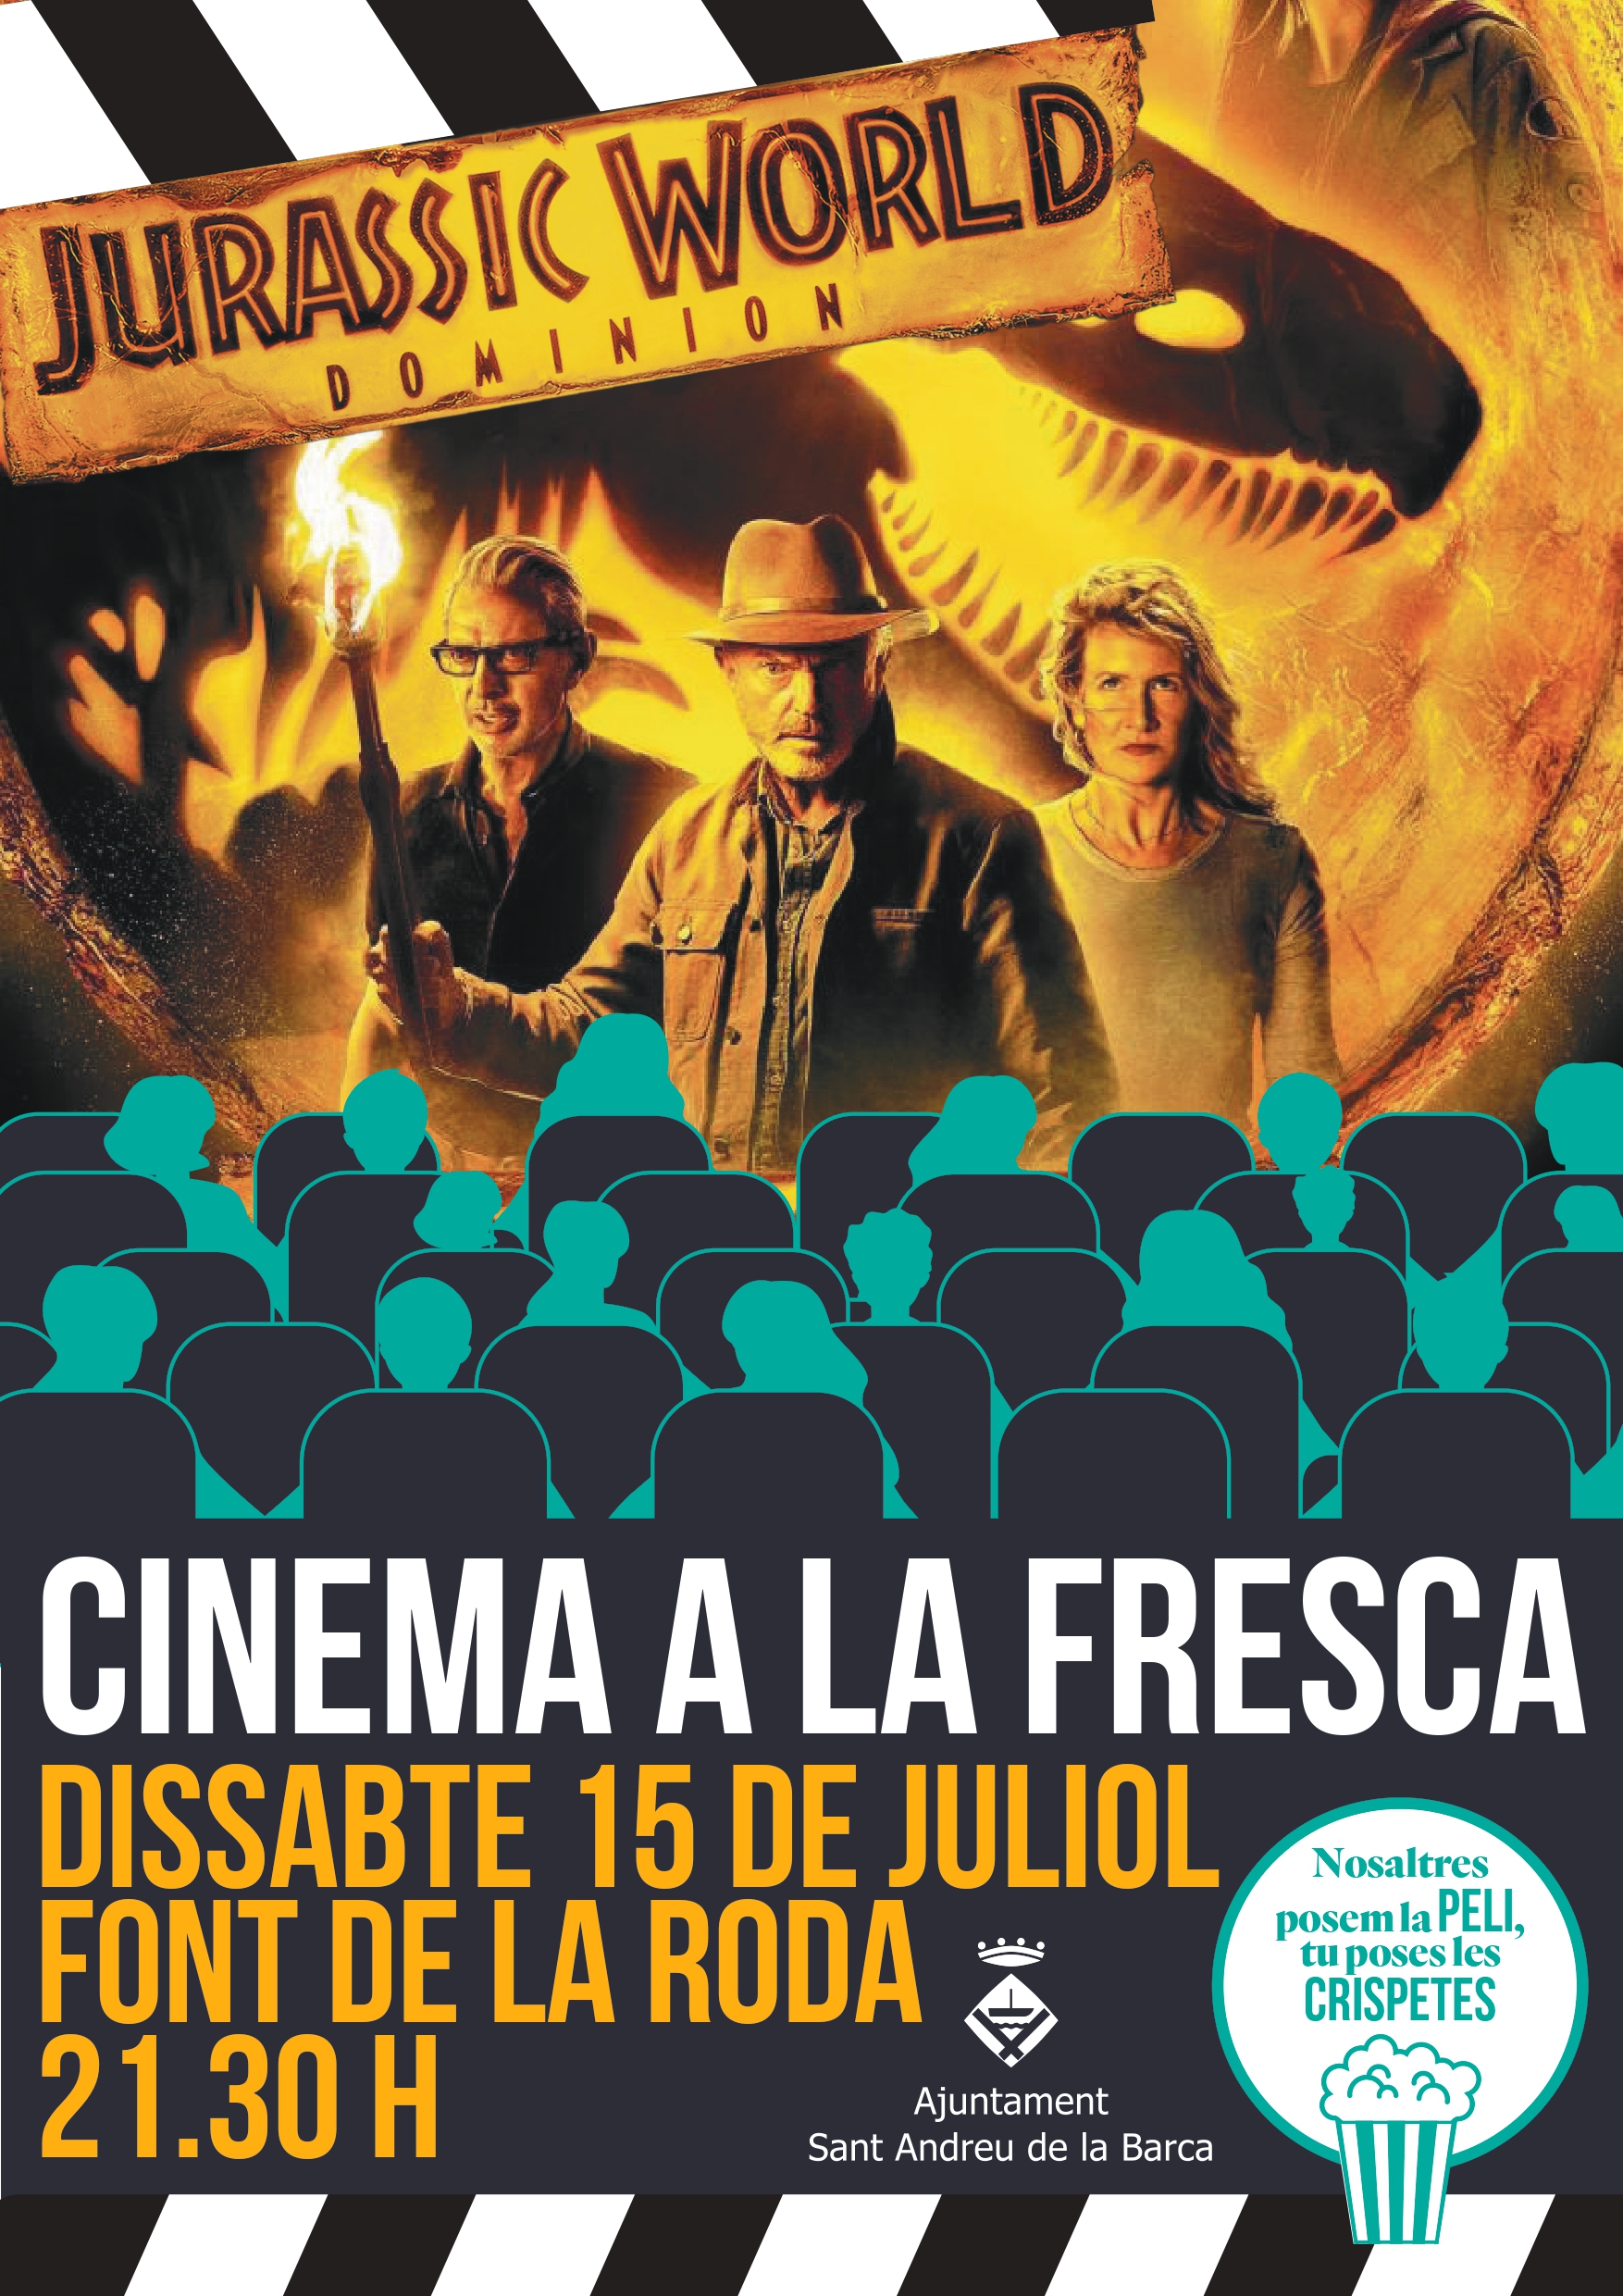 Jurassic World: Dominion serà la pel·lícula d’aquest dissabte al Cinema a la Fresca